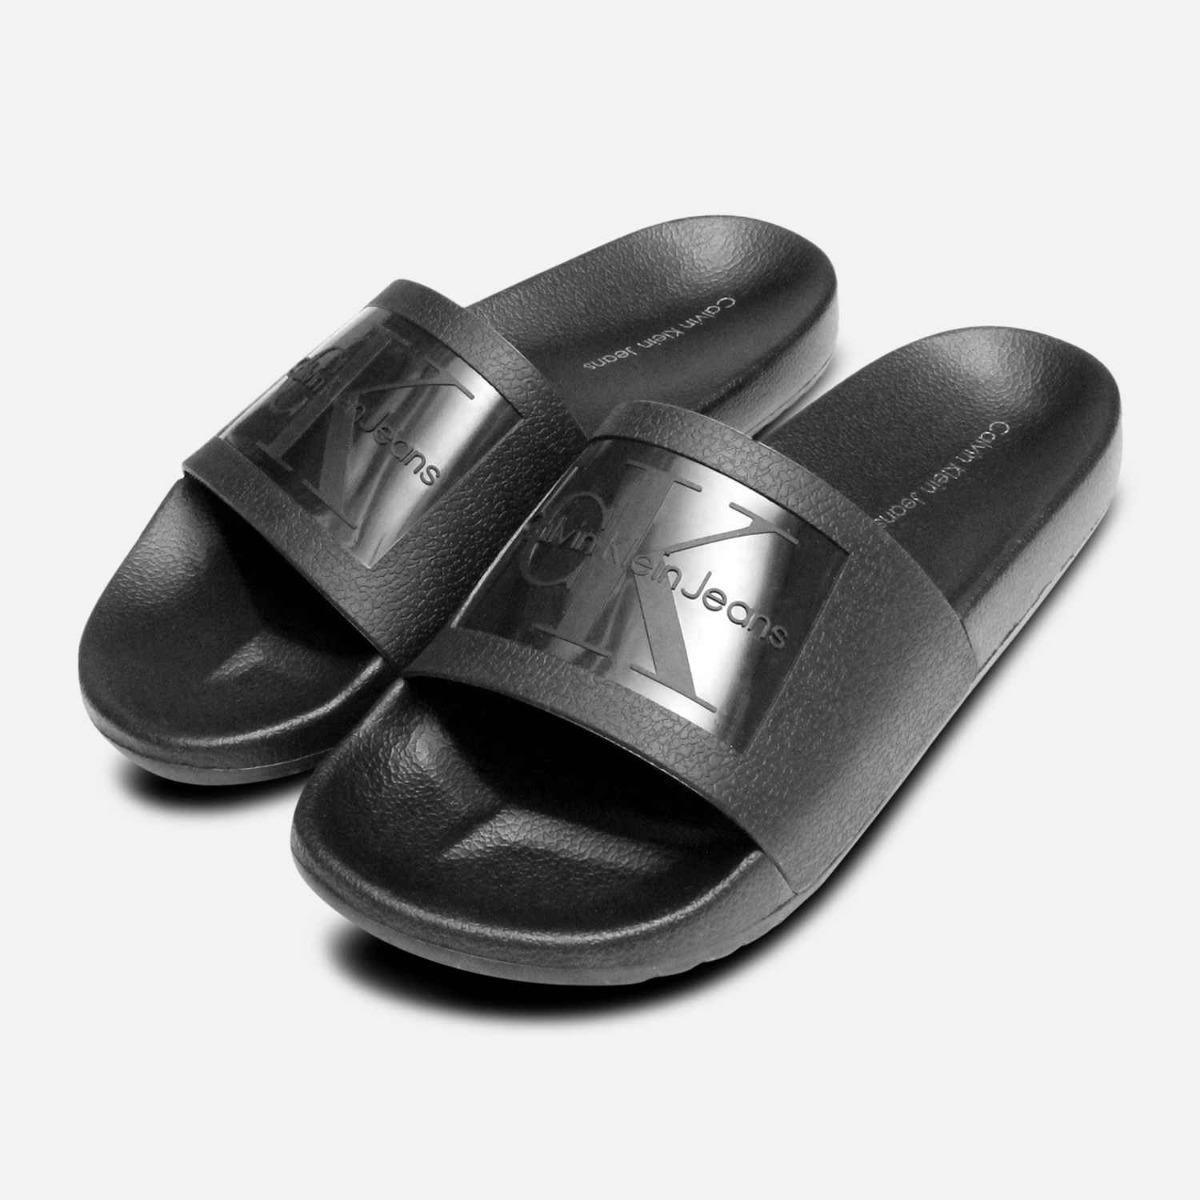 Vincenzo Black Jelly Calvin Klein Mens Slide Sandals | eBay